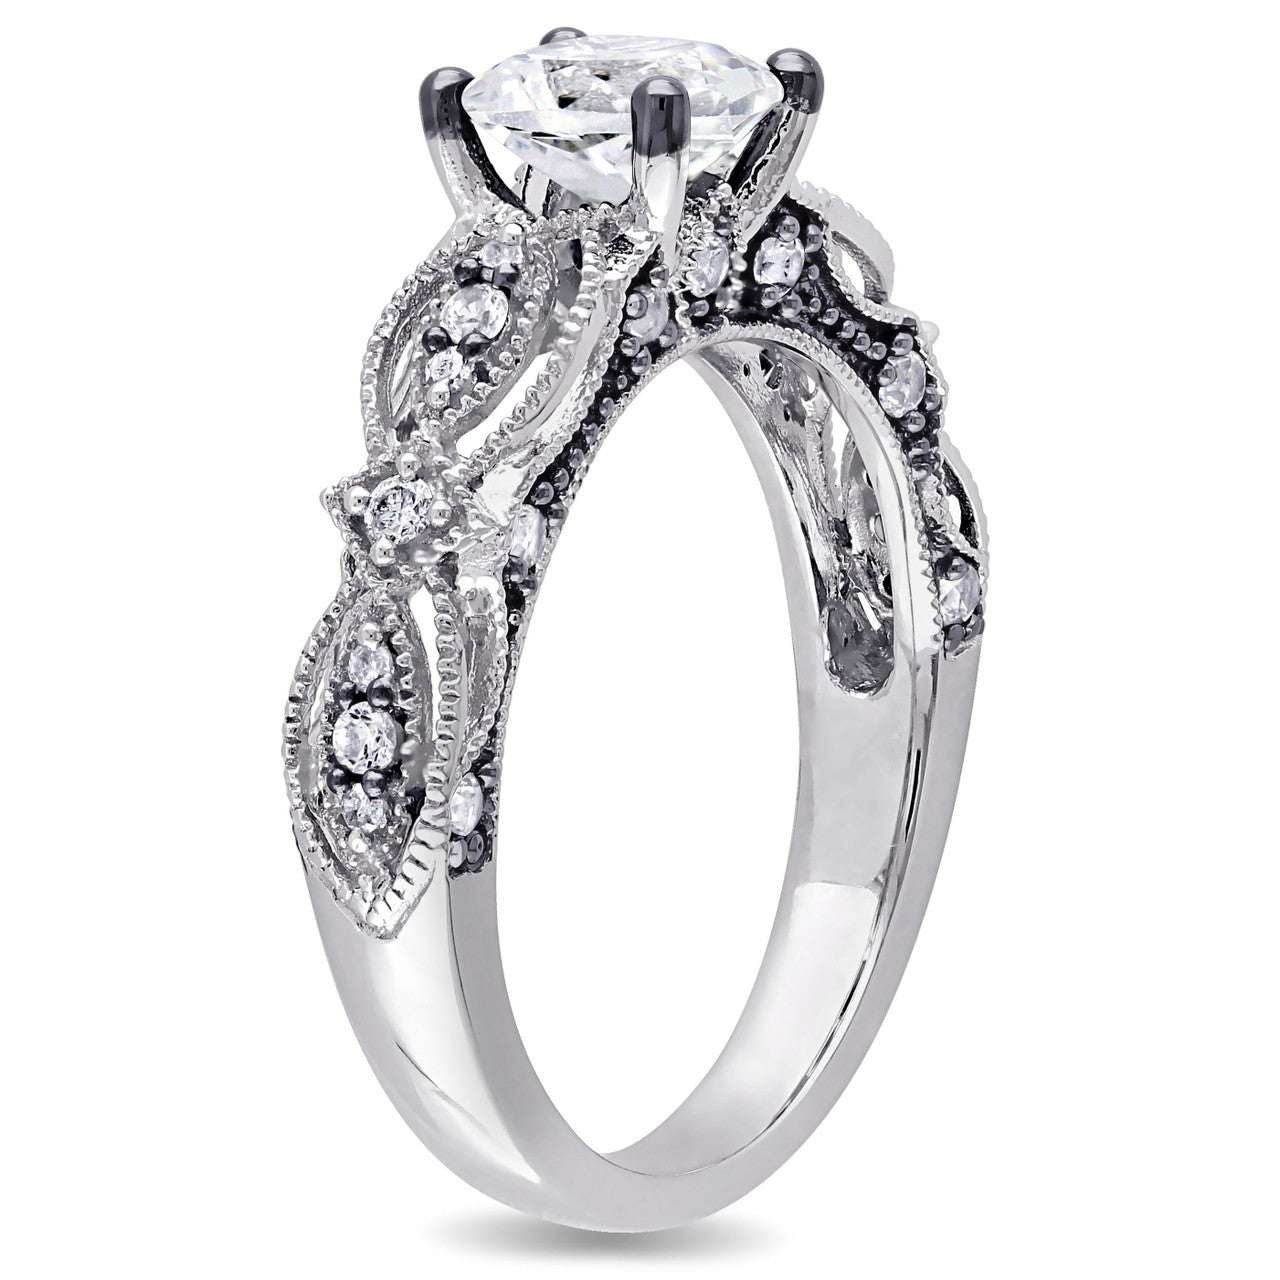 Ice Jewellery 0.07 CT Diamond TW & 1 5/8 CT TGW Created White Sapphire Ring in 10k White Gold - 75000004663 | Ice Jewellery Australia